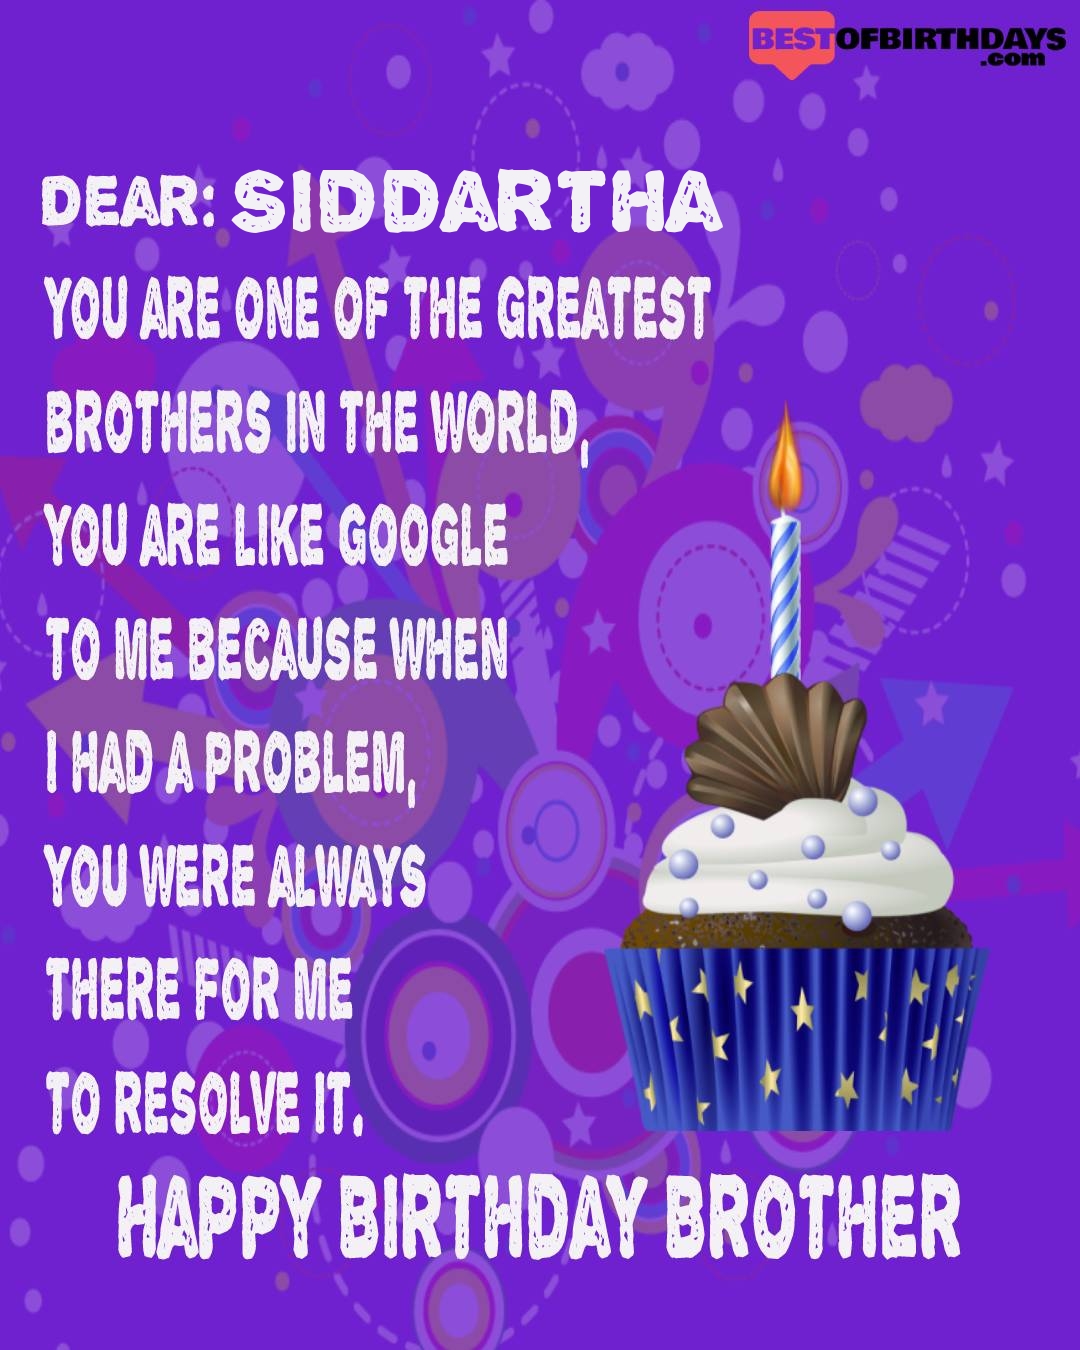 Happy birthday siddartha bhai brother bro